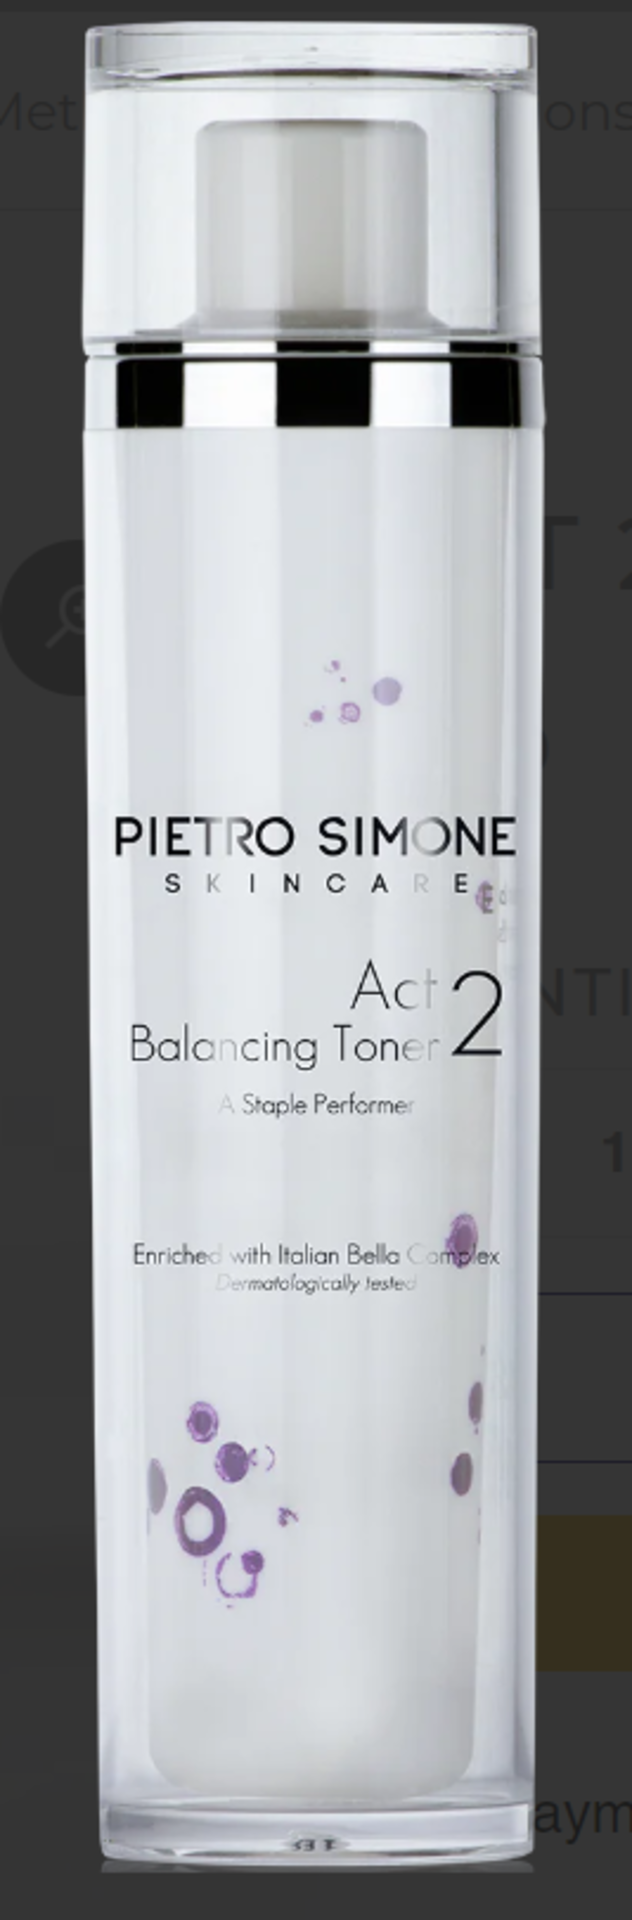 4 x Pietro Simone Skincare: ACT 2: BALANCING TONER 120ML. RRP £50.00. alancing Toner eliminates